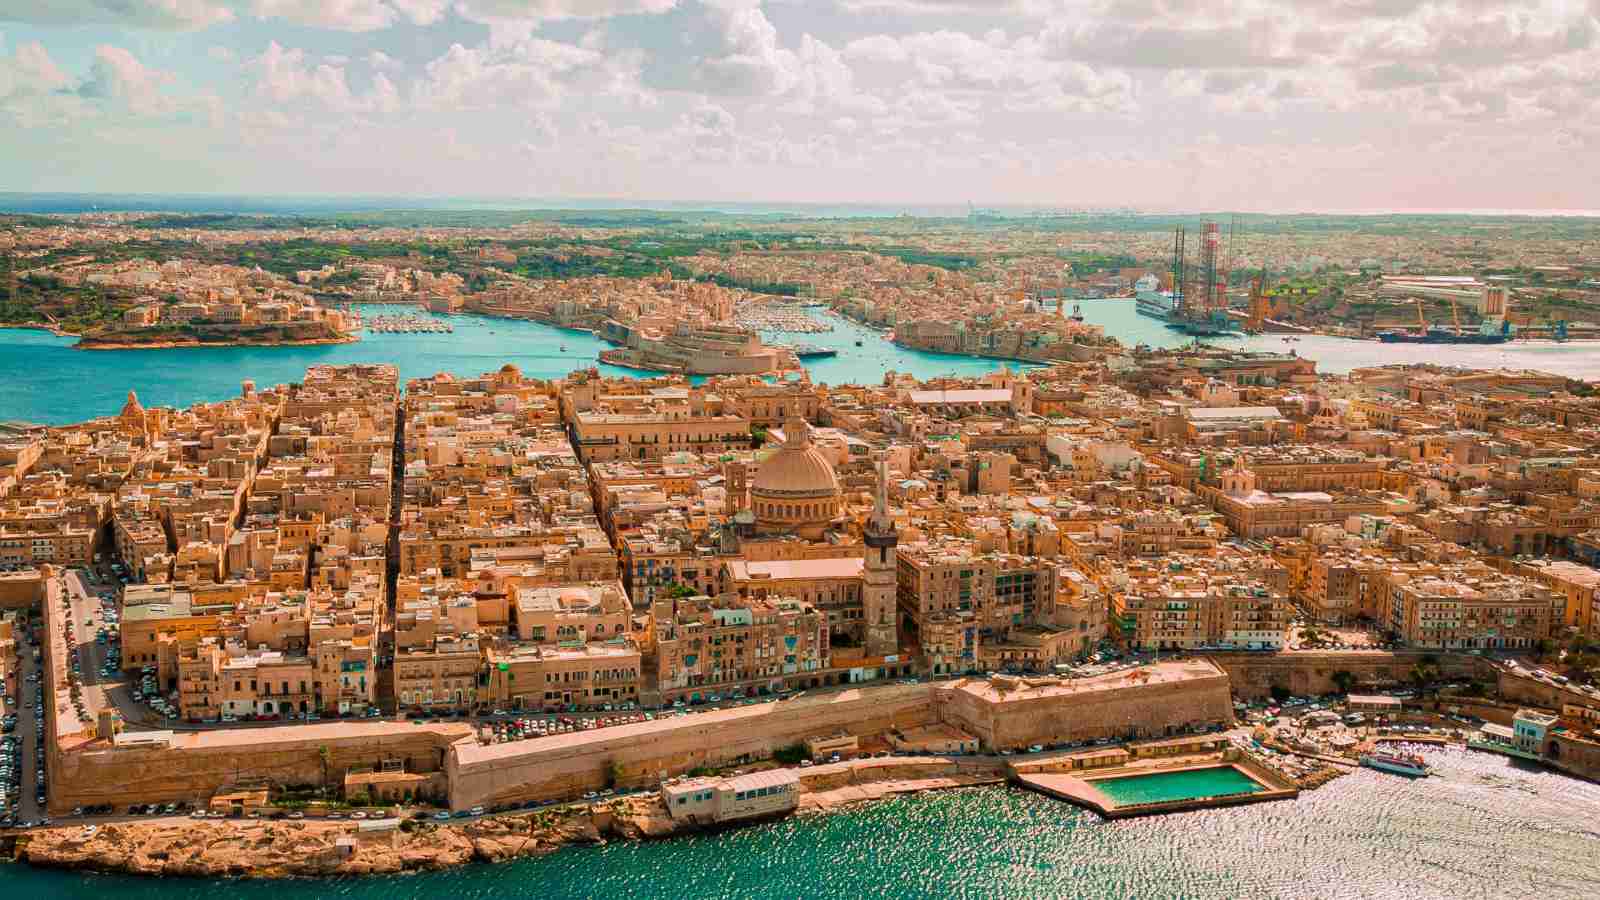 Aerial view of Valetta, Malta